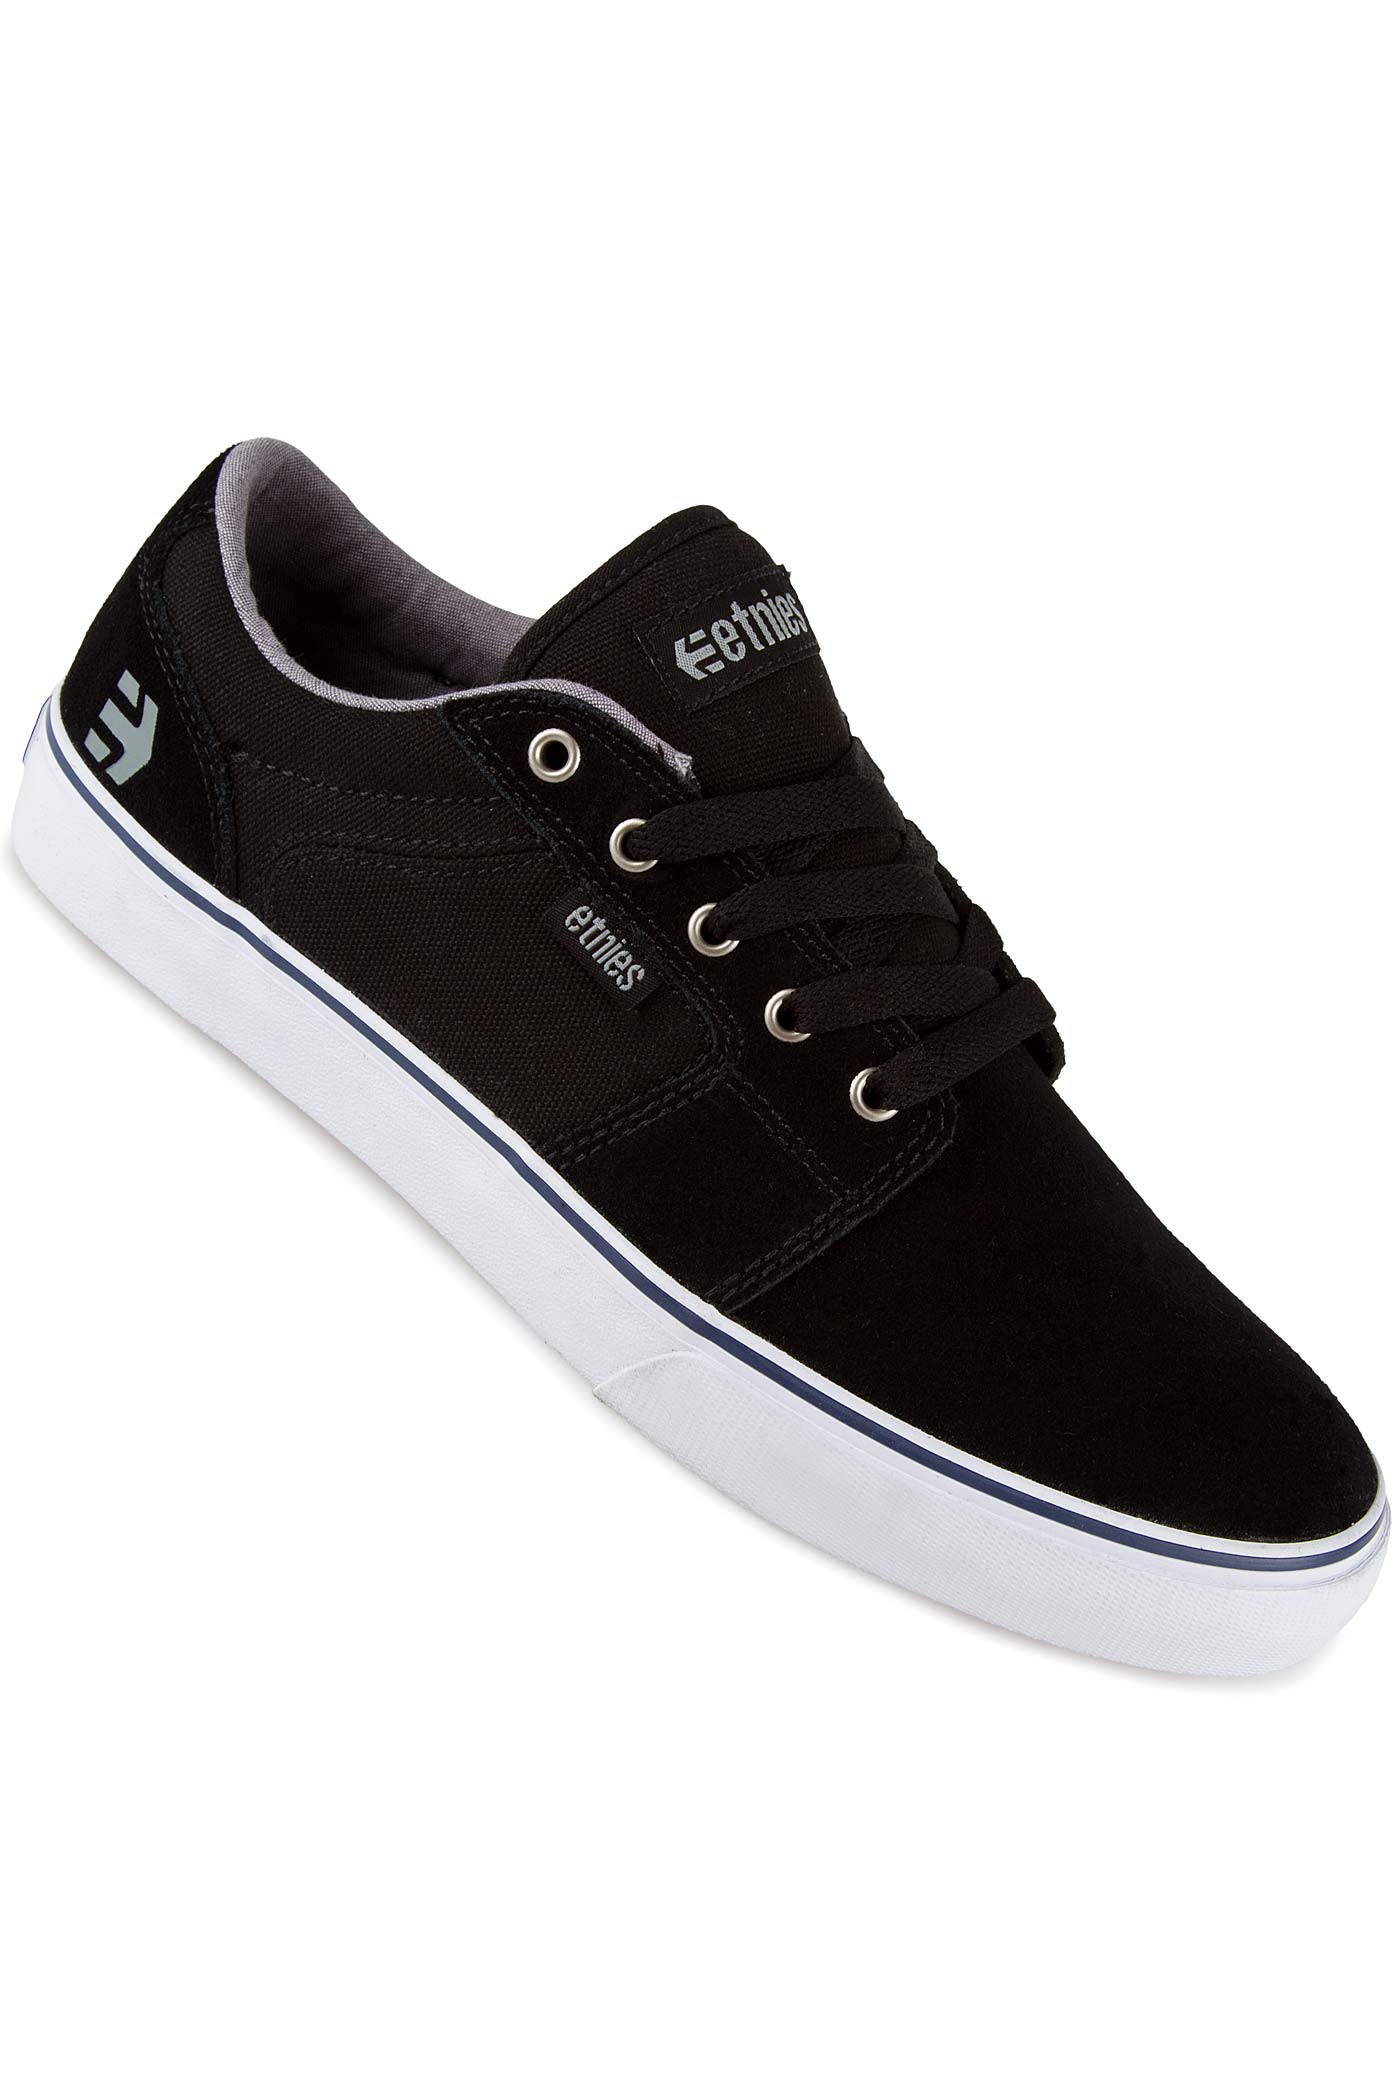 Etnies Barge LS Shoes (black white) buy at skatedeluxe